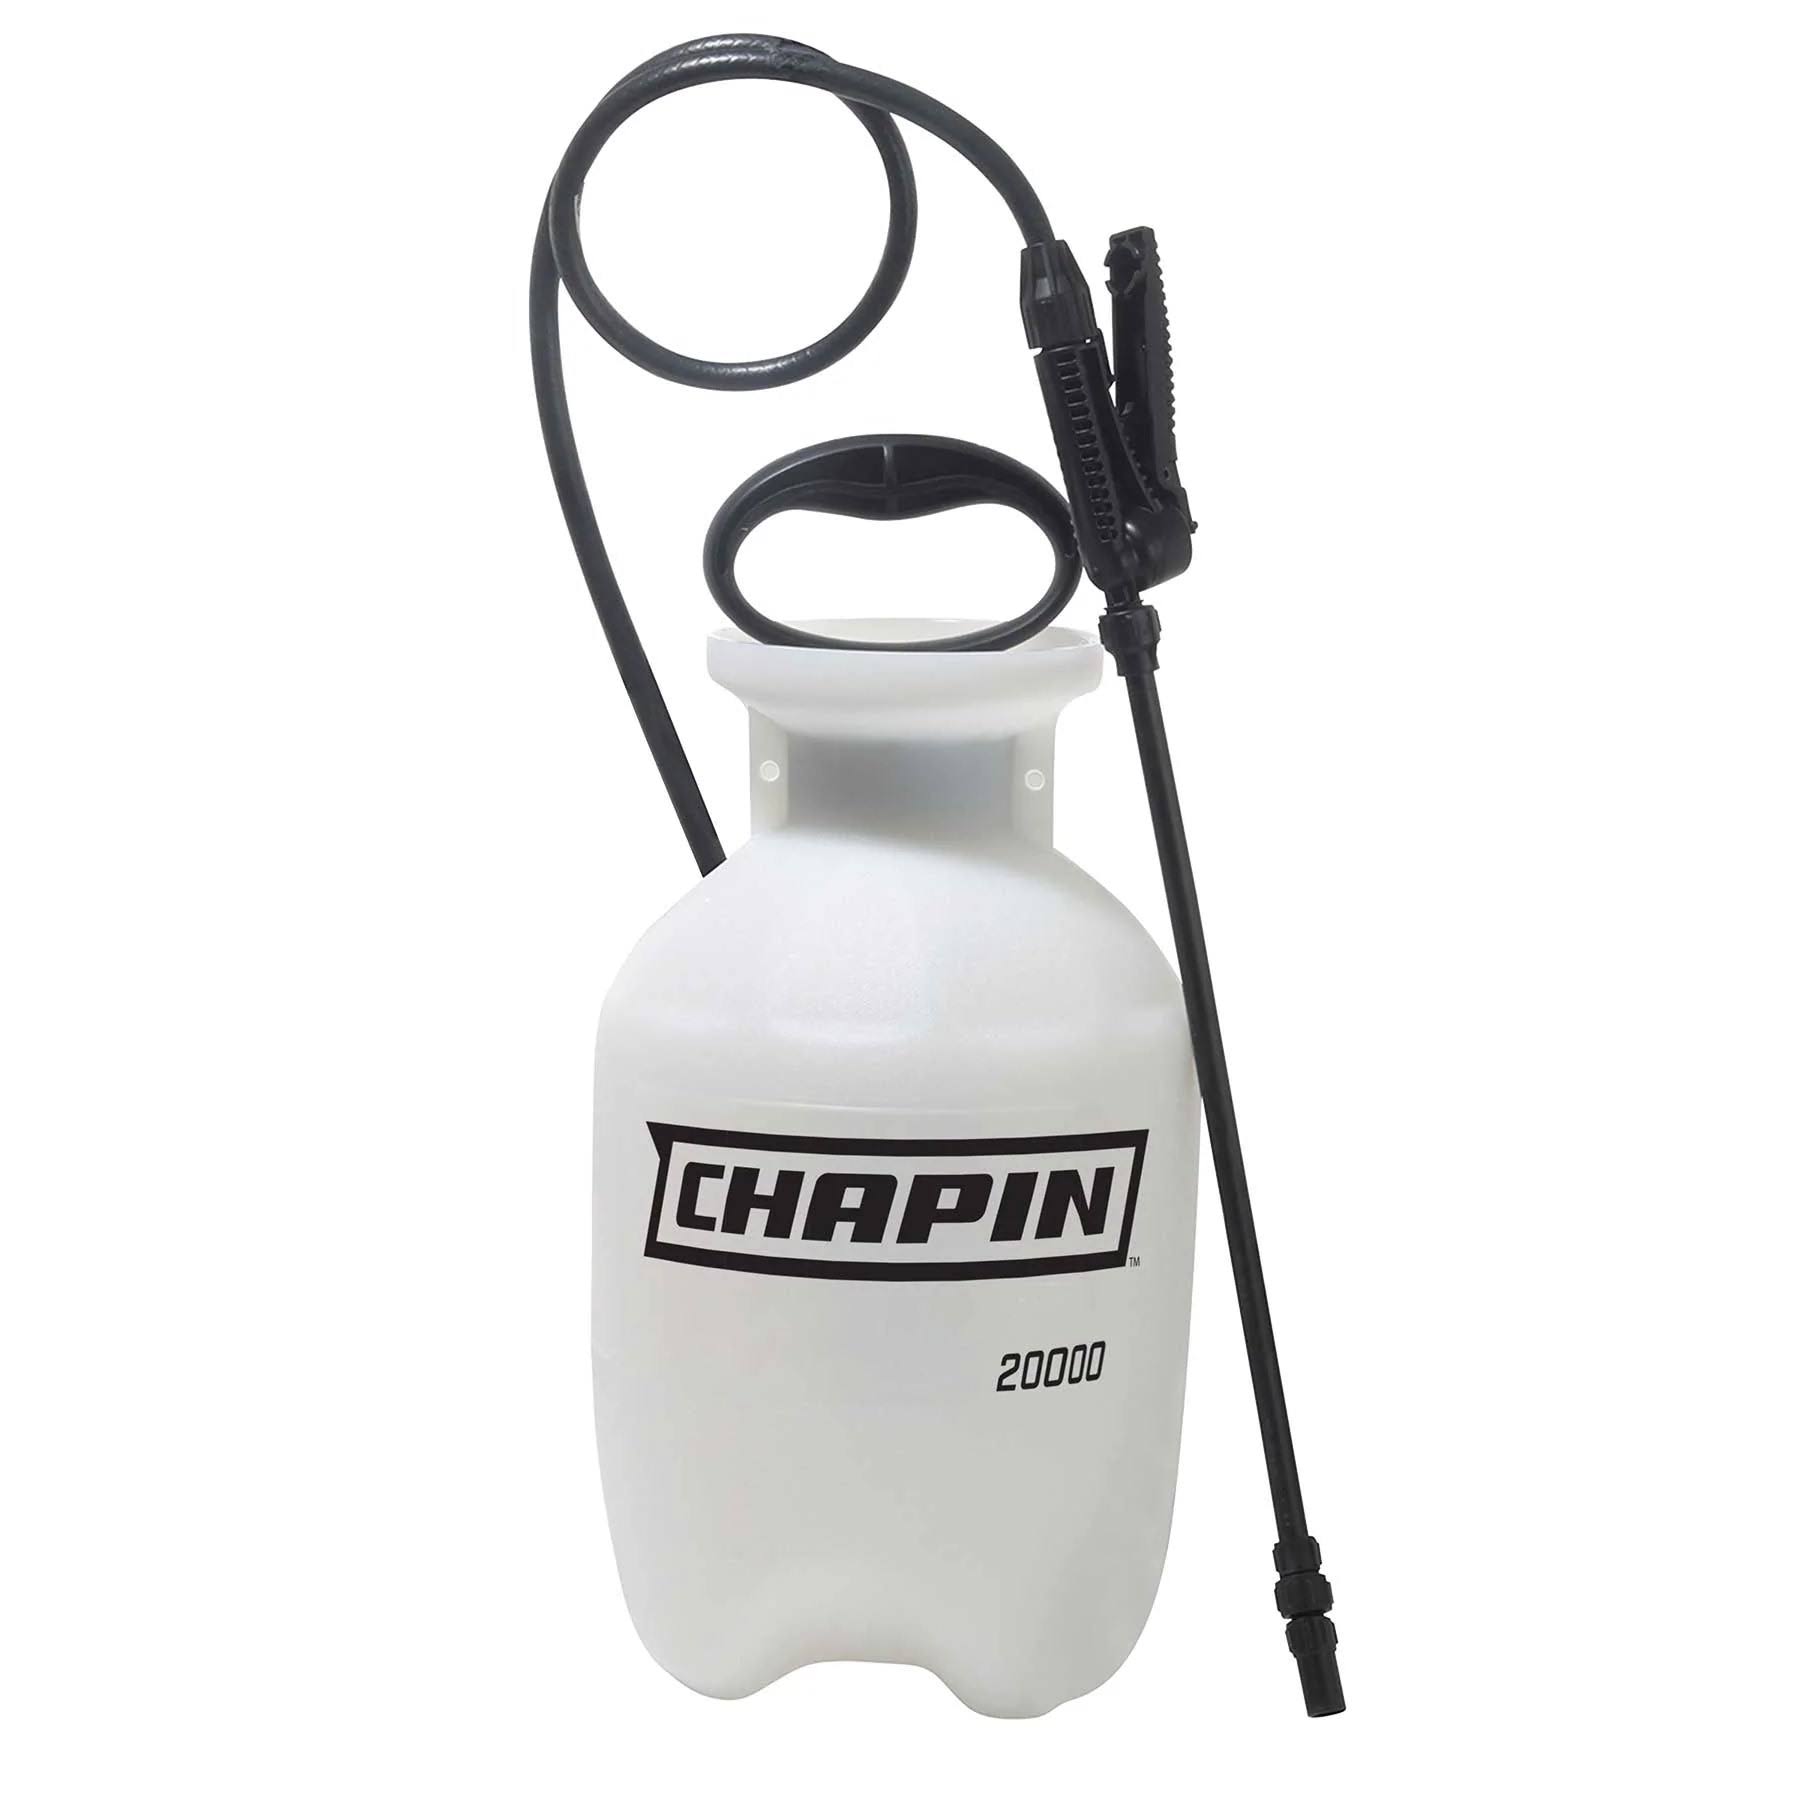 Chapin Lawn and Garden Sprayer - 1gal